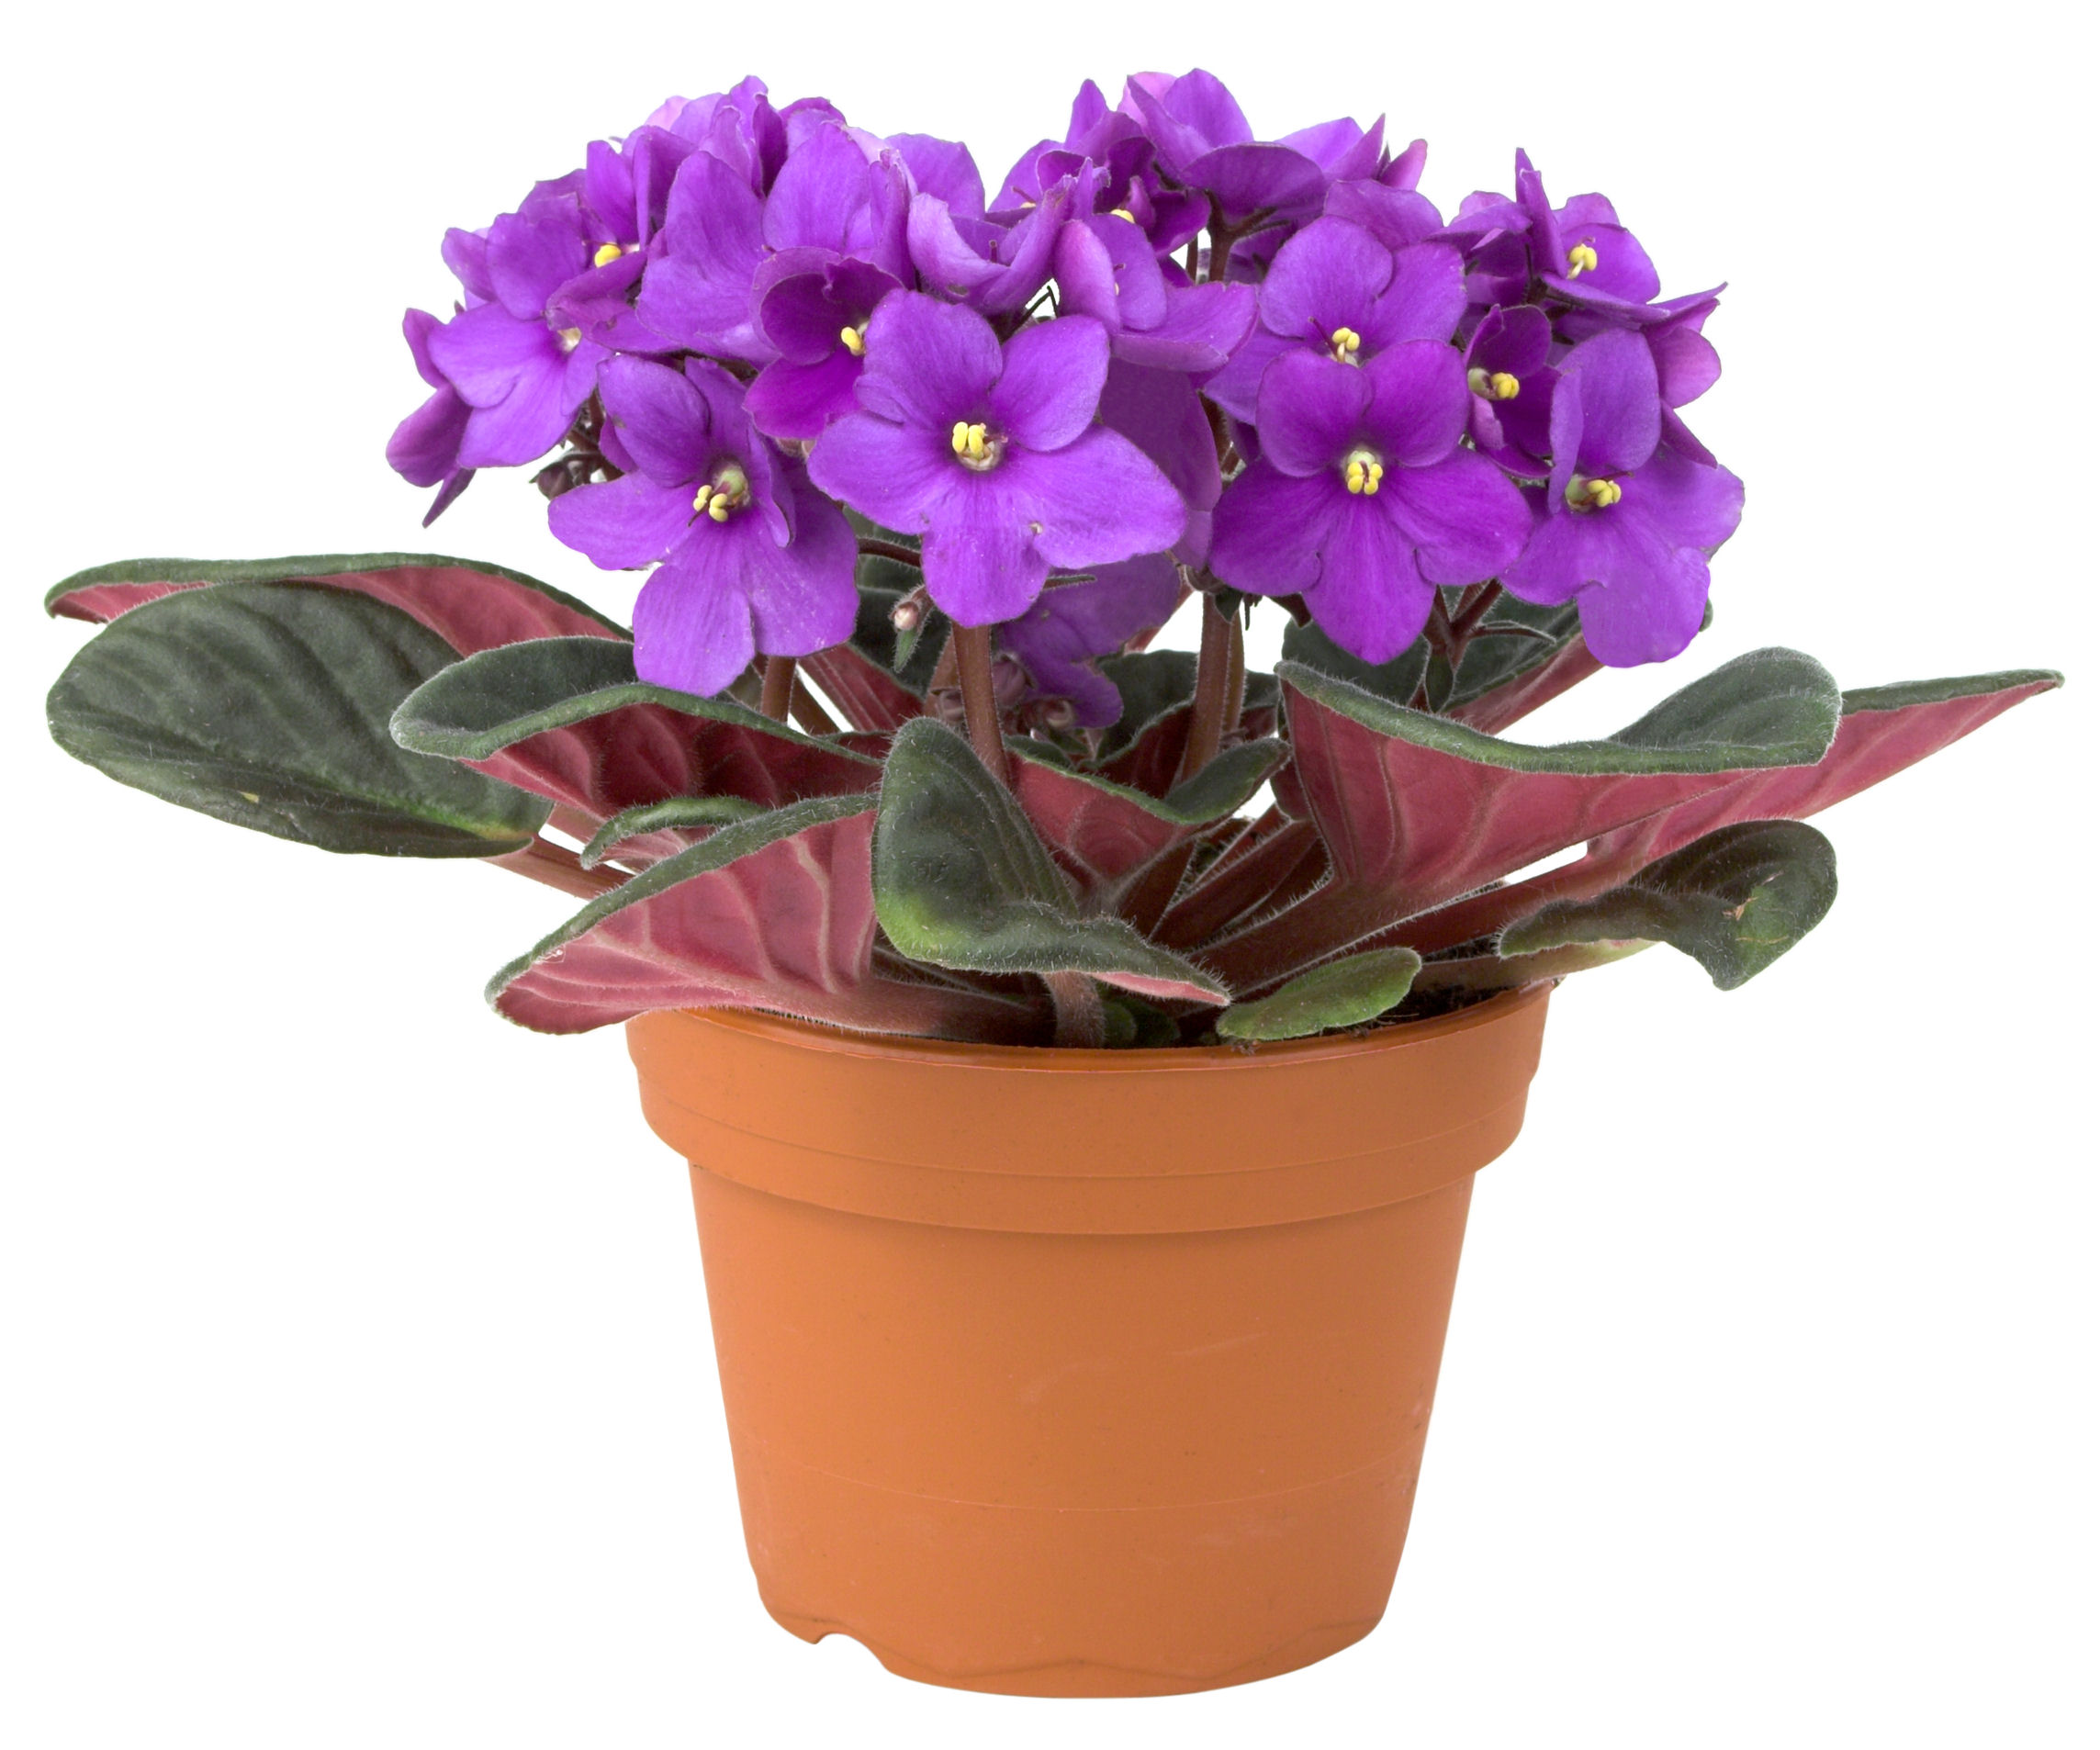 Fun Flower Facts: African Violet | Grower Direct Fresh Cut Flowers ...